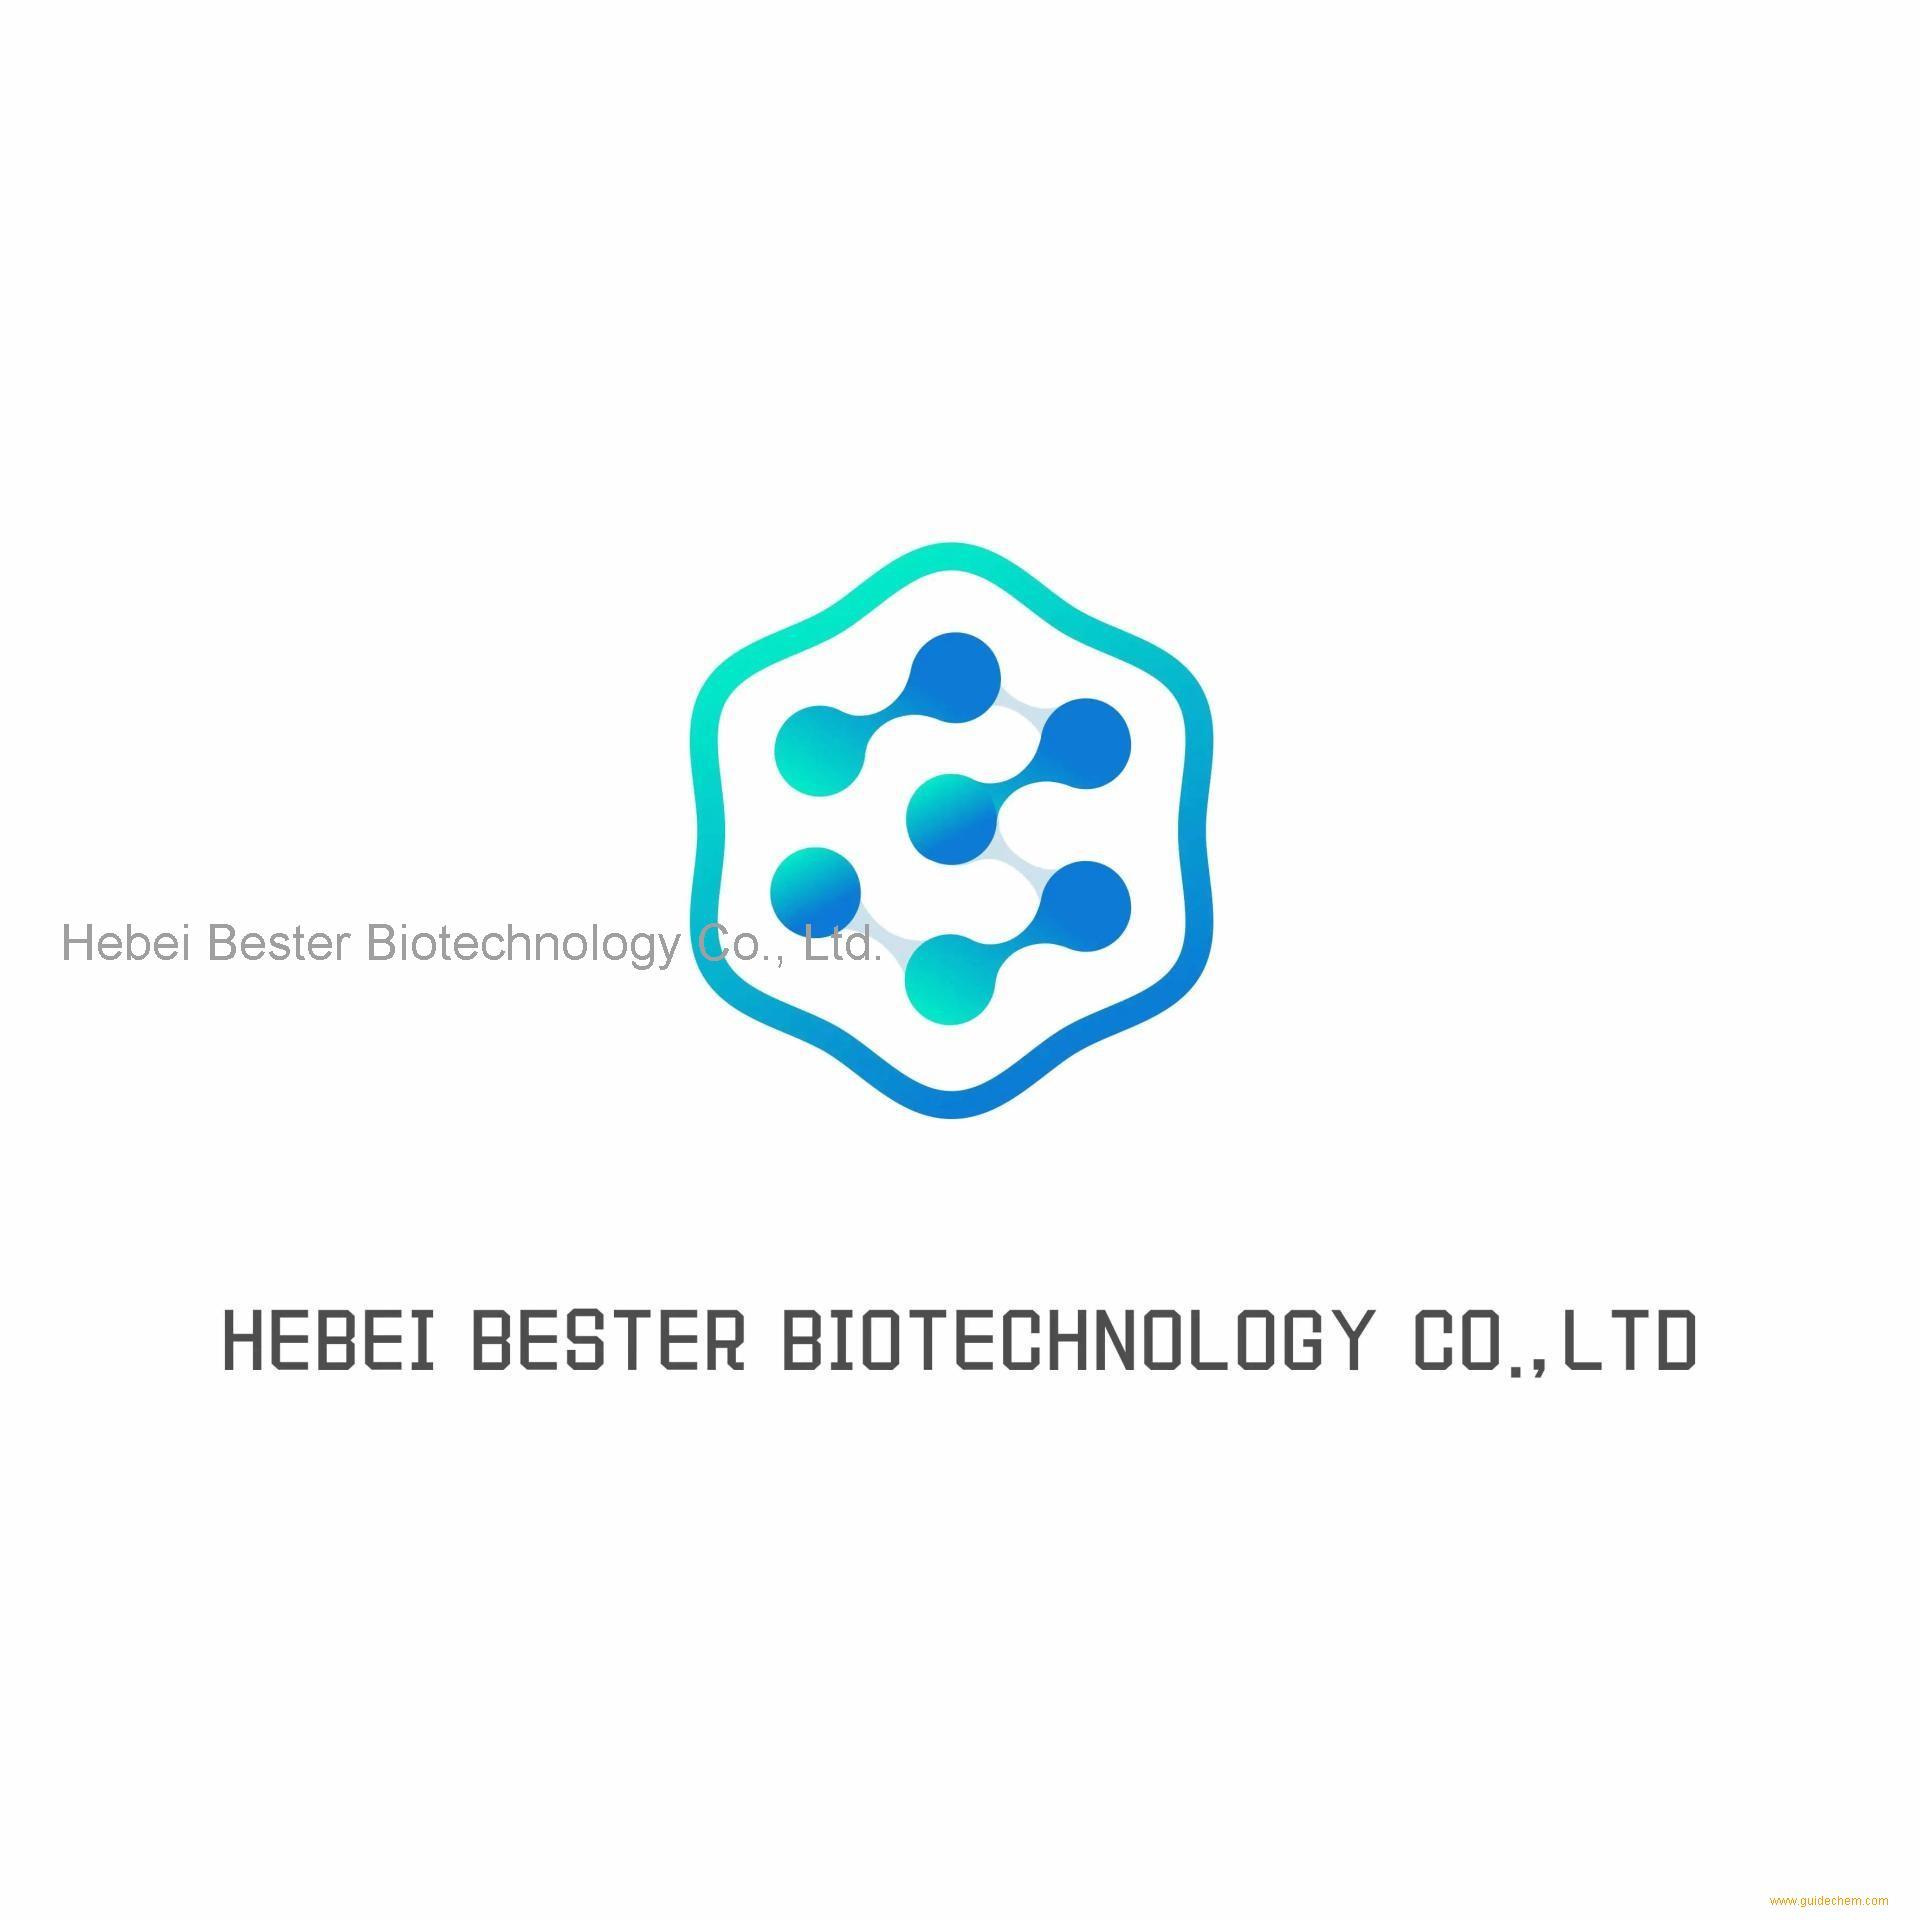 Hebei Bester Biotechnology Co., Ltd.